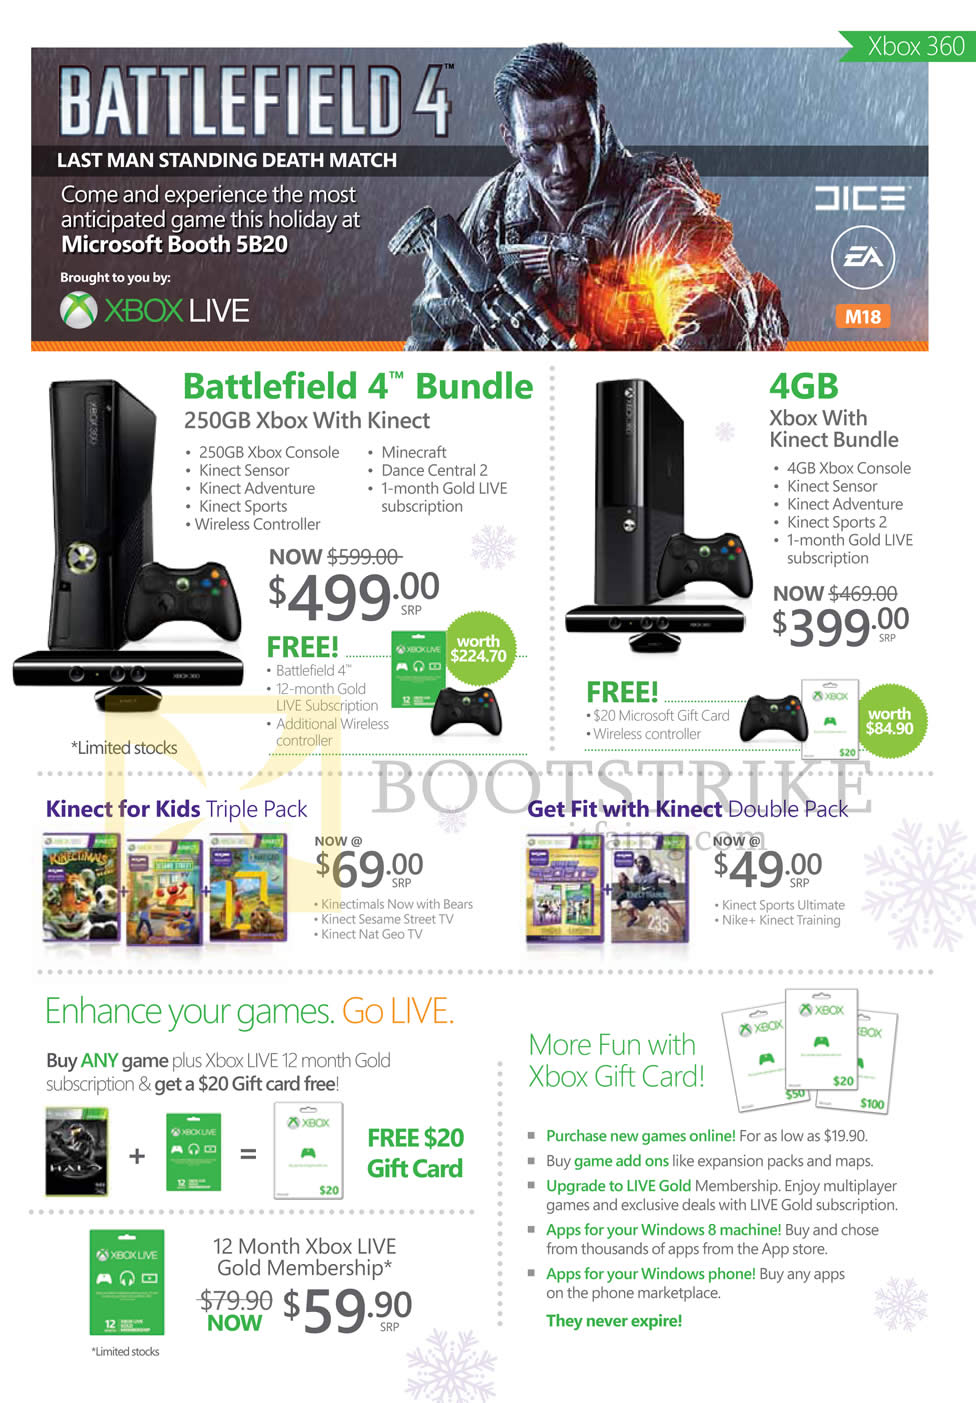 SITEX 2013 price list image brochure of Microsoft Xbox 360 Battlefield 4 Bundle, Kinect Bundle, Games, Kids, Get Fit, Xbox Gift Card, Live Gold Membership